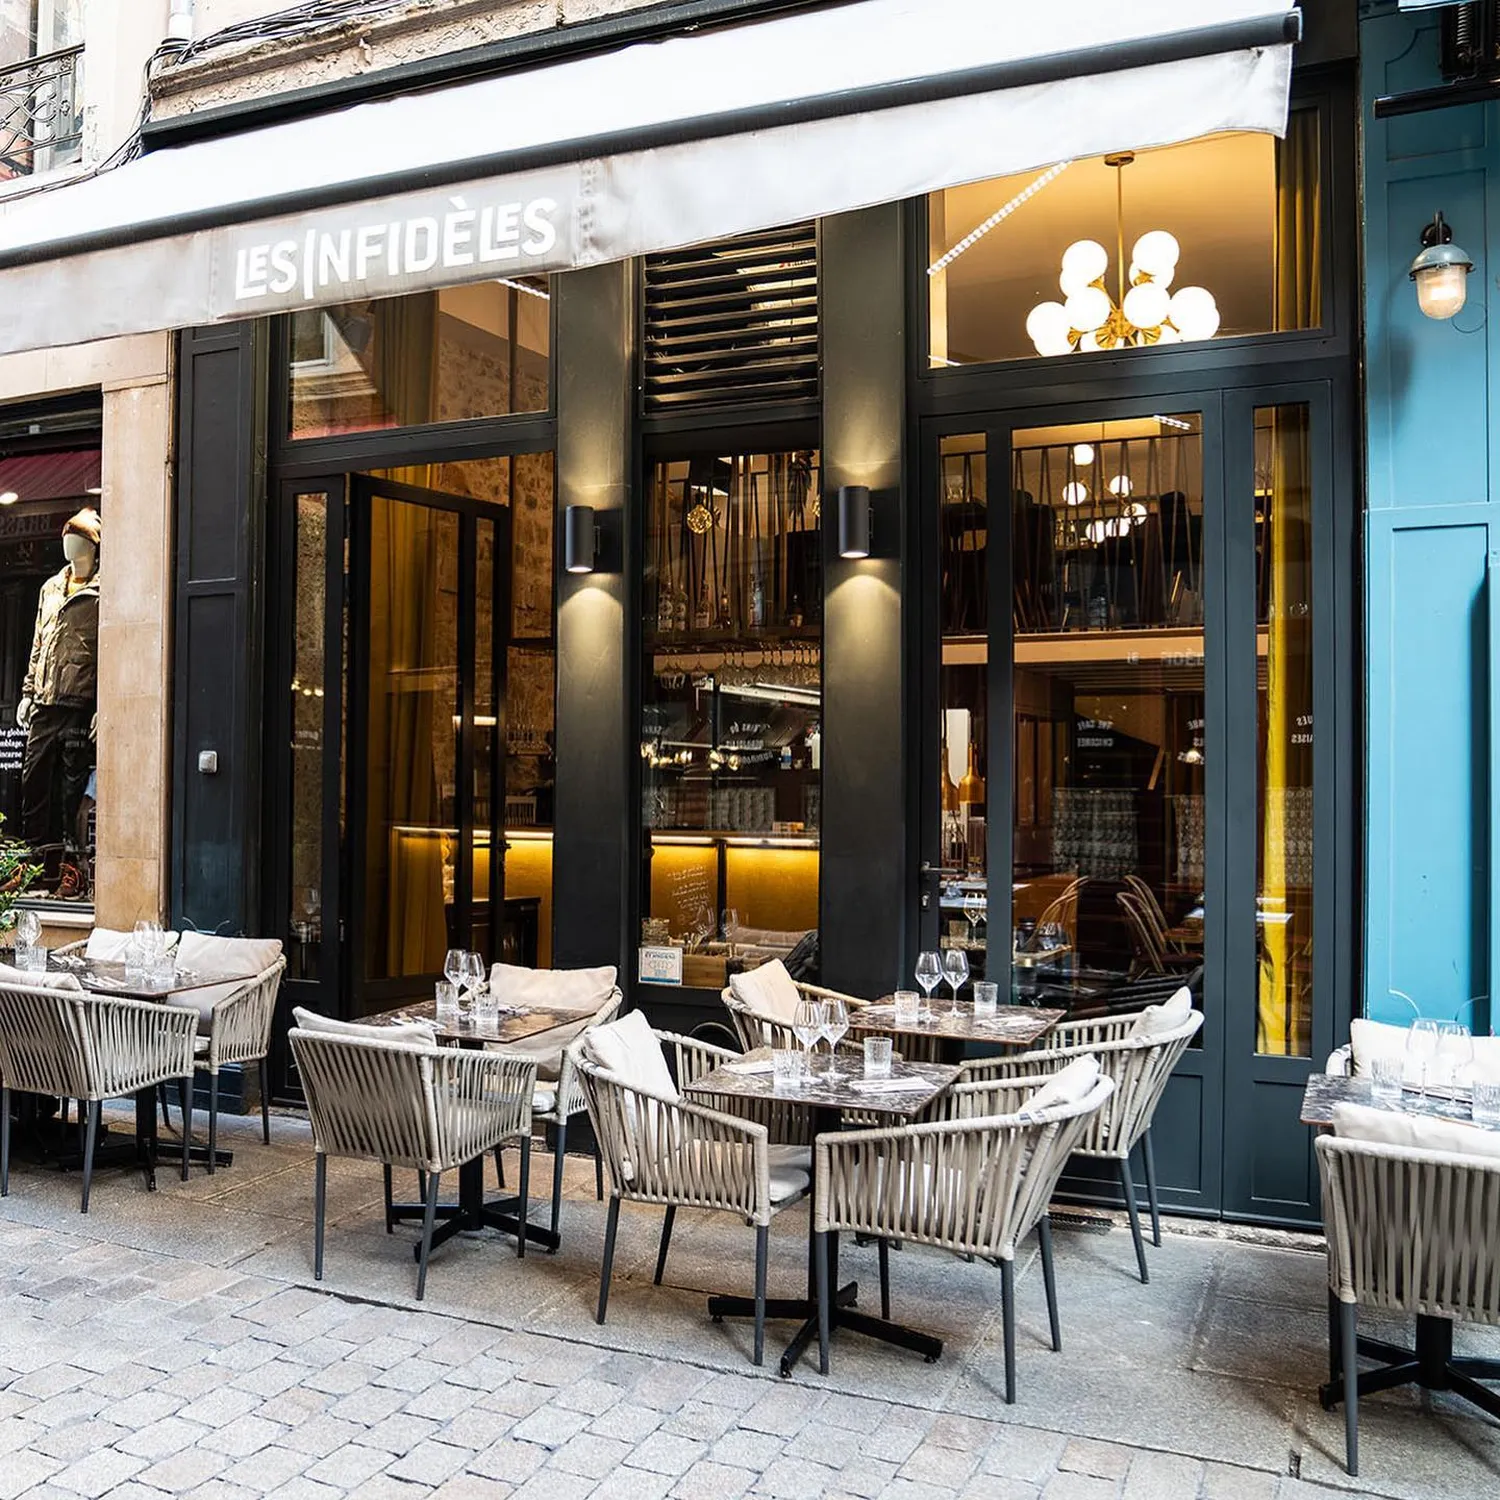 Reservation at LES INFIDELES restaurant - Lyon | KEYS